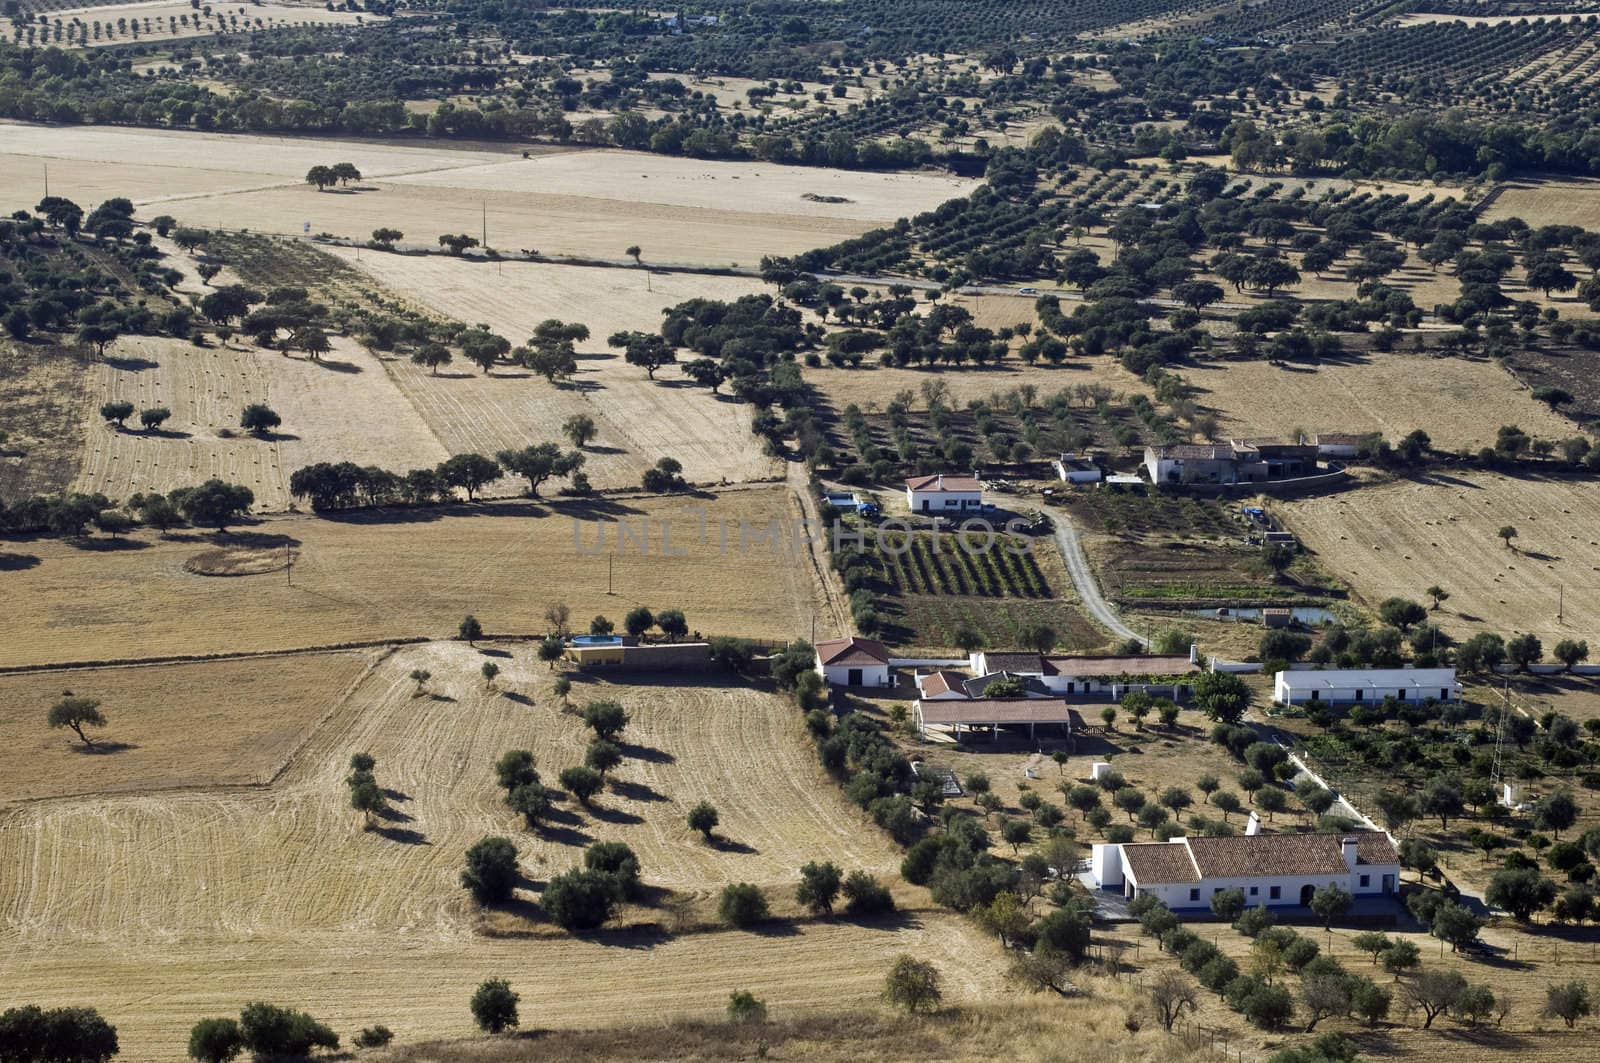 Vista of farmland near Monsaraz, Alentejo, Portugal by mrfotos